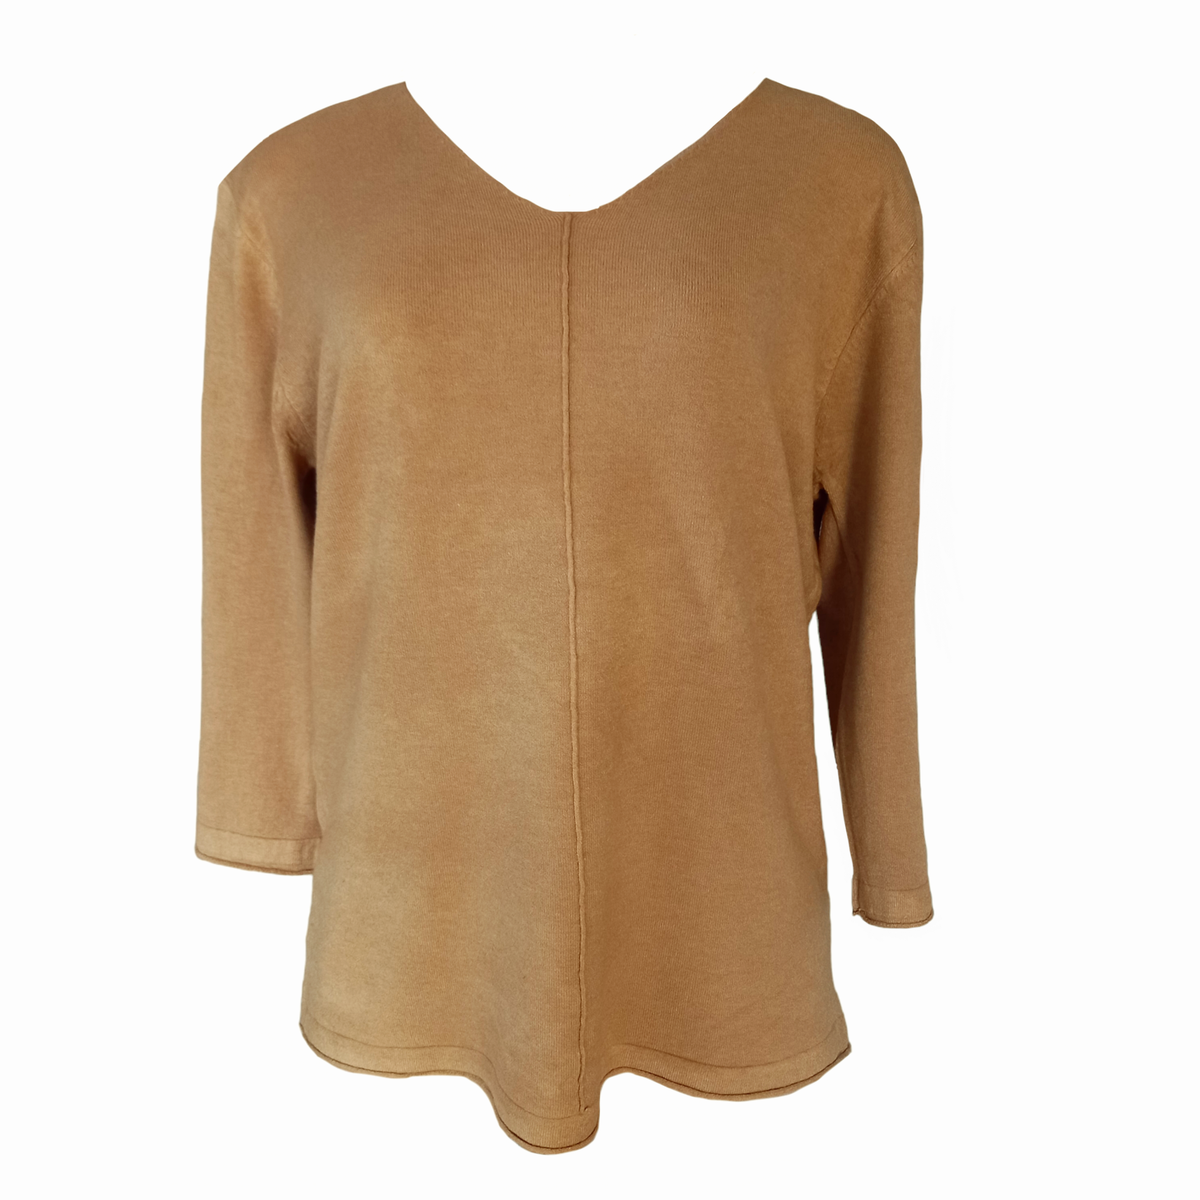 Ladies Camel Knit Top | Shop Today. Get it Tomorrow! | takealot.com